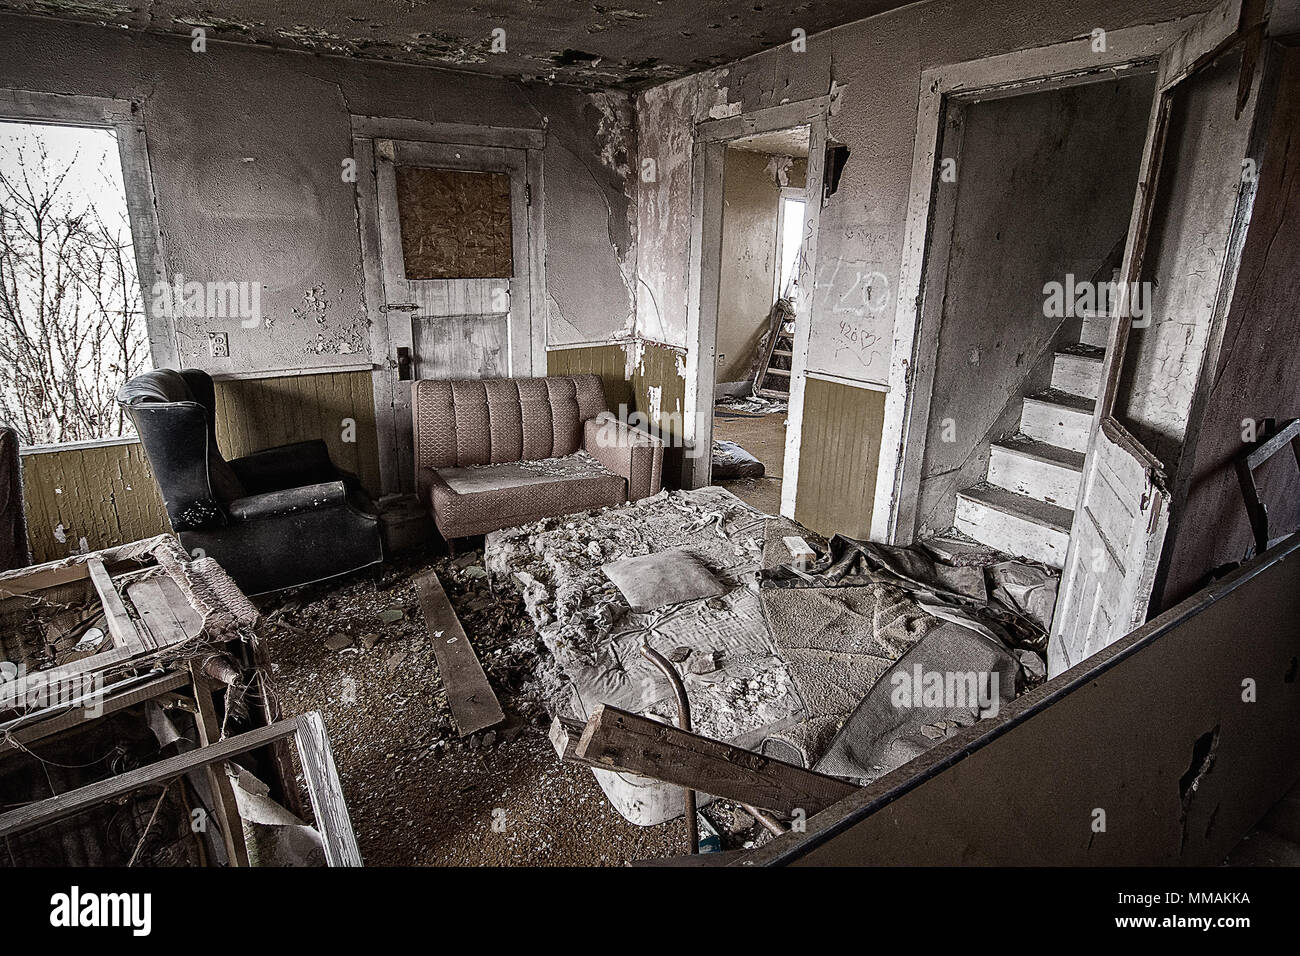 Introducir 30+ imagen imagenes de casas abandonadas por dentro